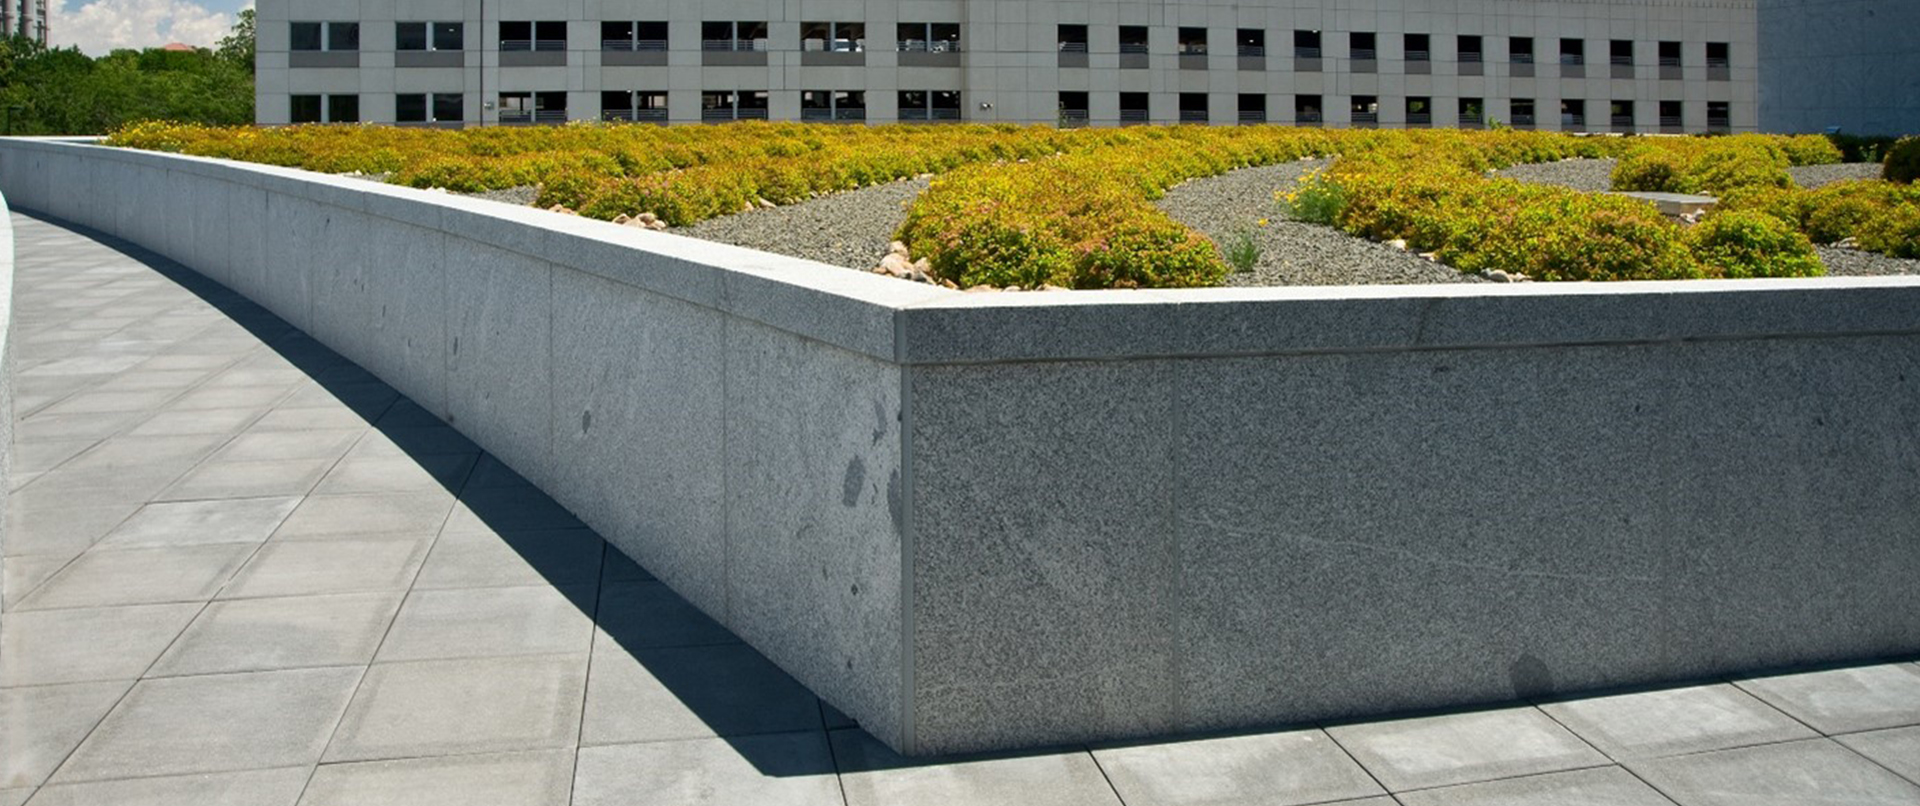 Outdoor Concrete Paver Walkway